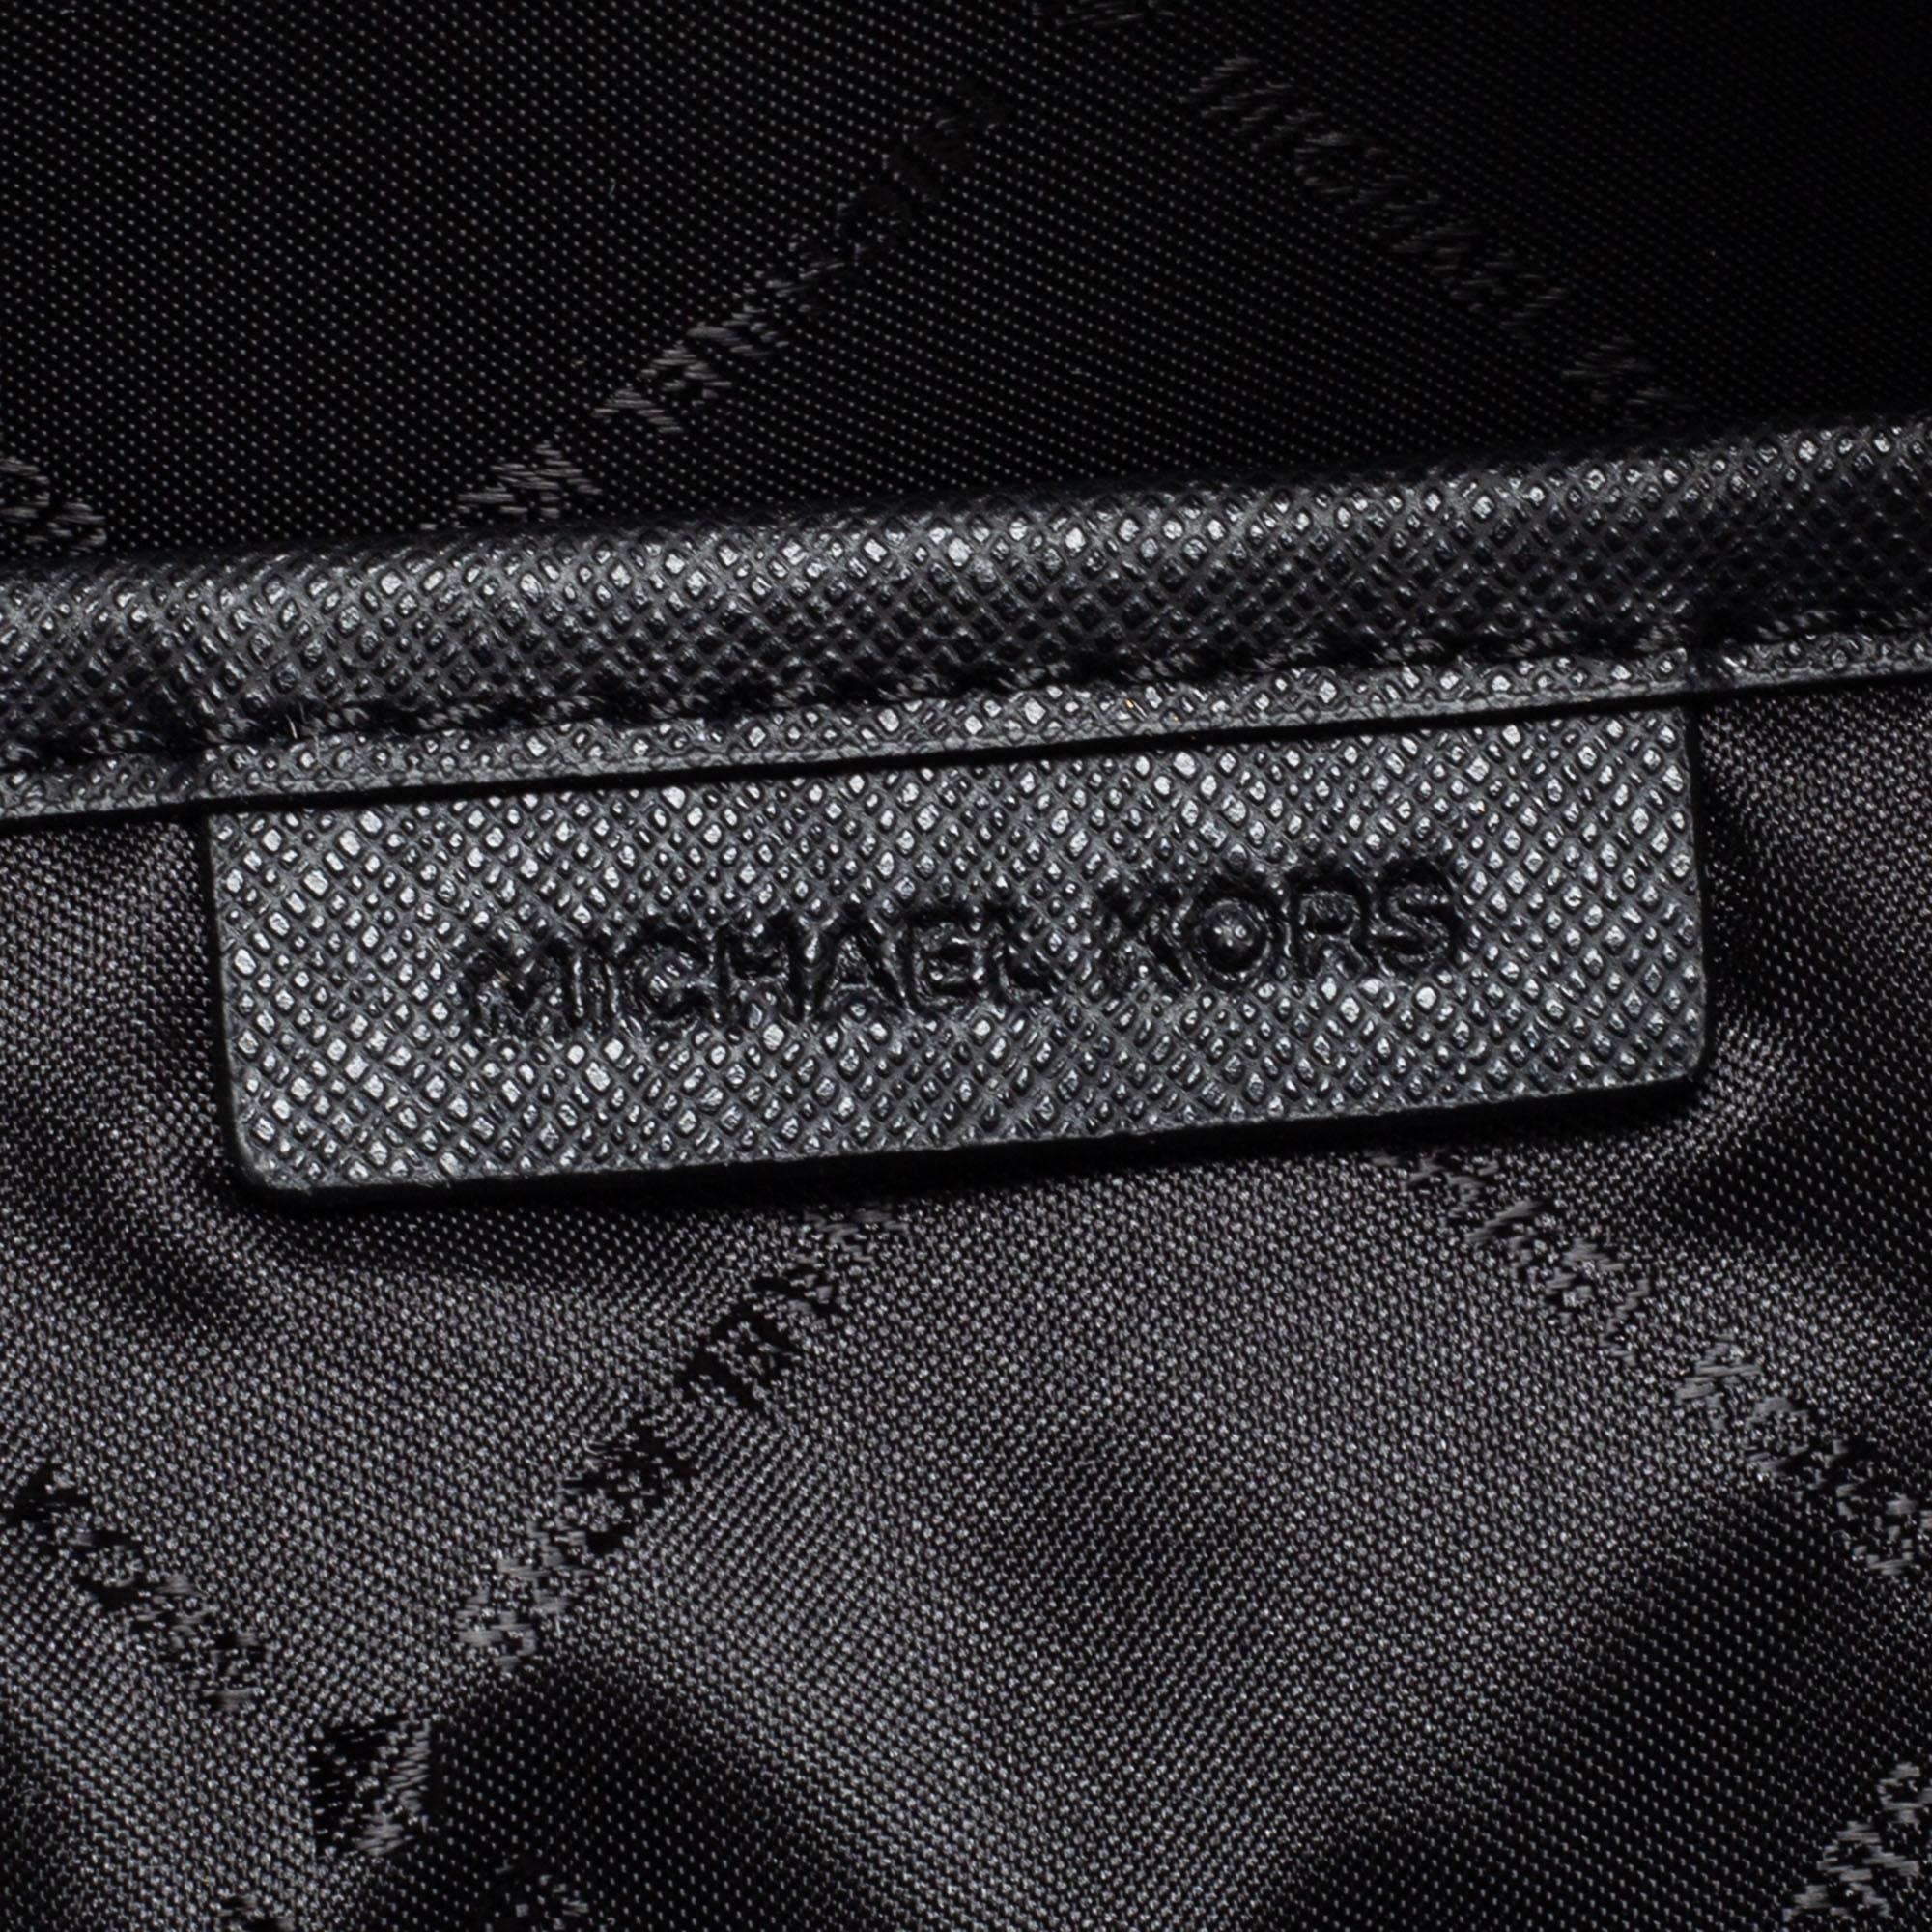 Michael Kors Black Leather Jet Set Crossbody Bag 4